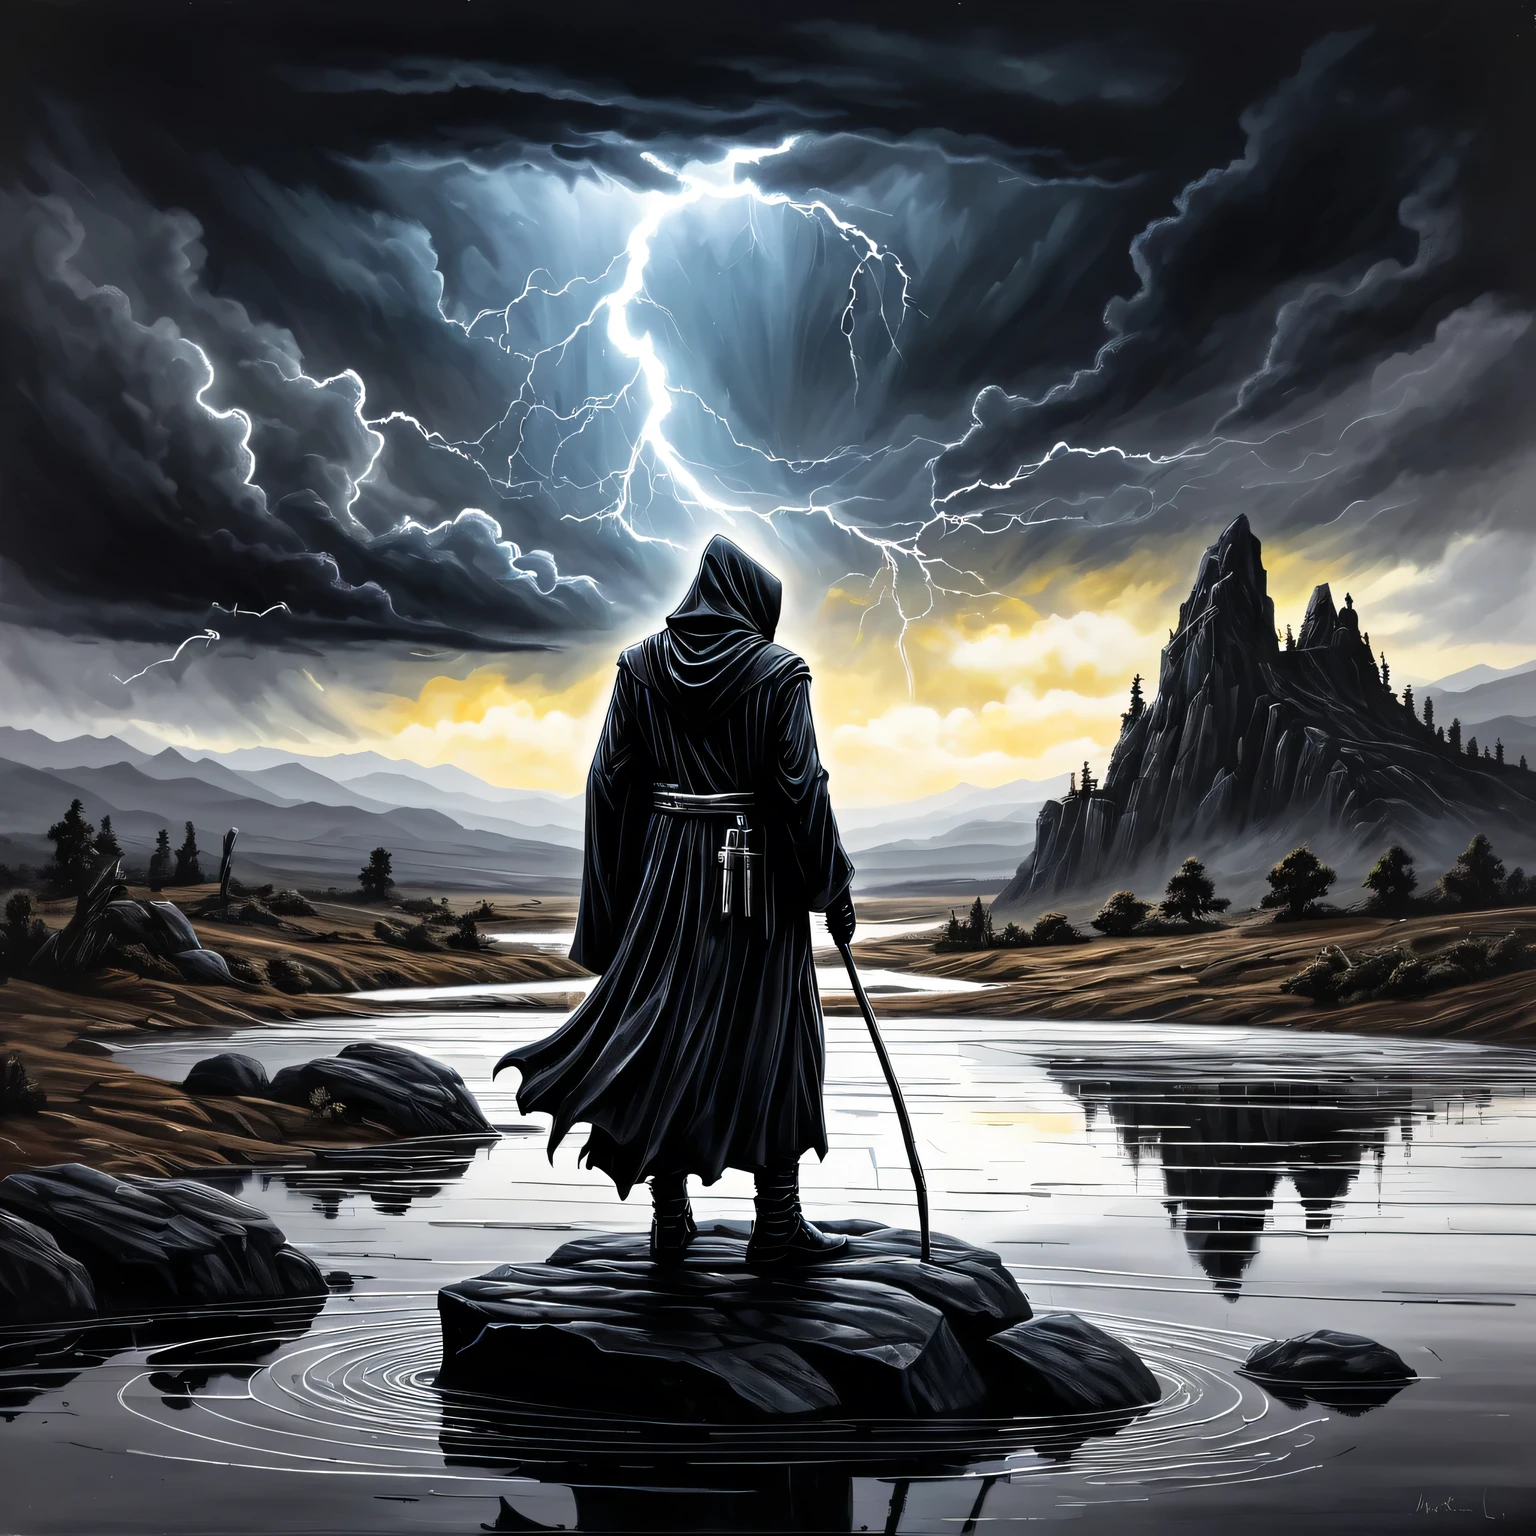 ((Liquid 금속 Art)), 그림은 질감이 있는 종이에 액체 금속으로 칠해져 있으며 바위 위에 서 있는 Black Grim Reaper와 함께 아름답고 미니멀한 풍경을 묘사합니다., Liquid 금속 Black Grim Reaper looks ominous and gloomy, 배경에는 구름과 번개가 있는 우울한 하늘이 있습니다, 그림은 액체 금속으로 만들어졌습니다.. 금속, 걸작, 명확한 윤곽, 32캐럿